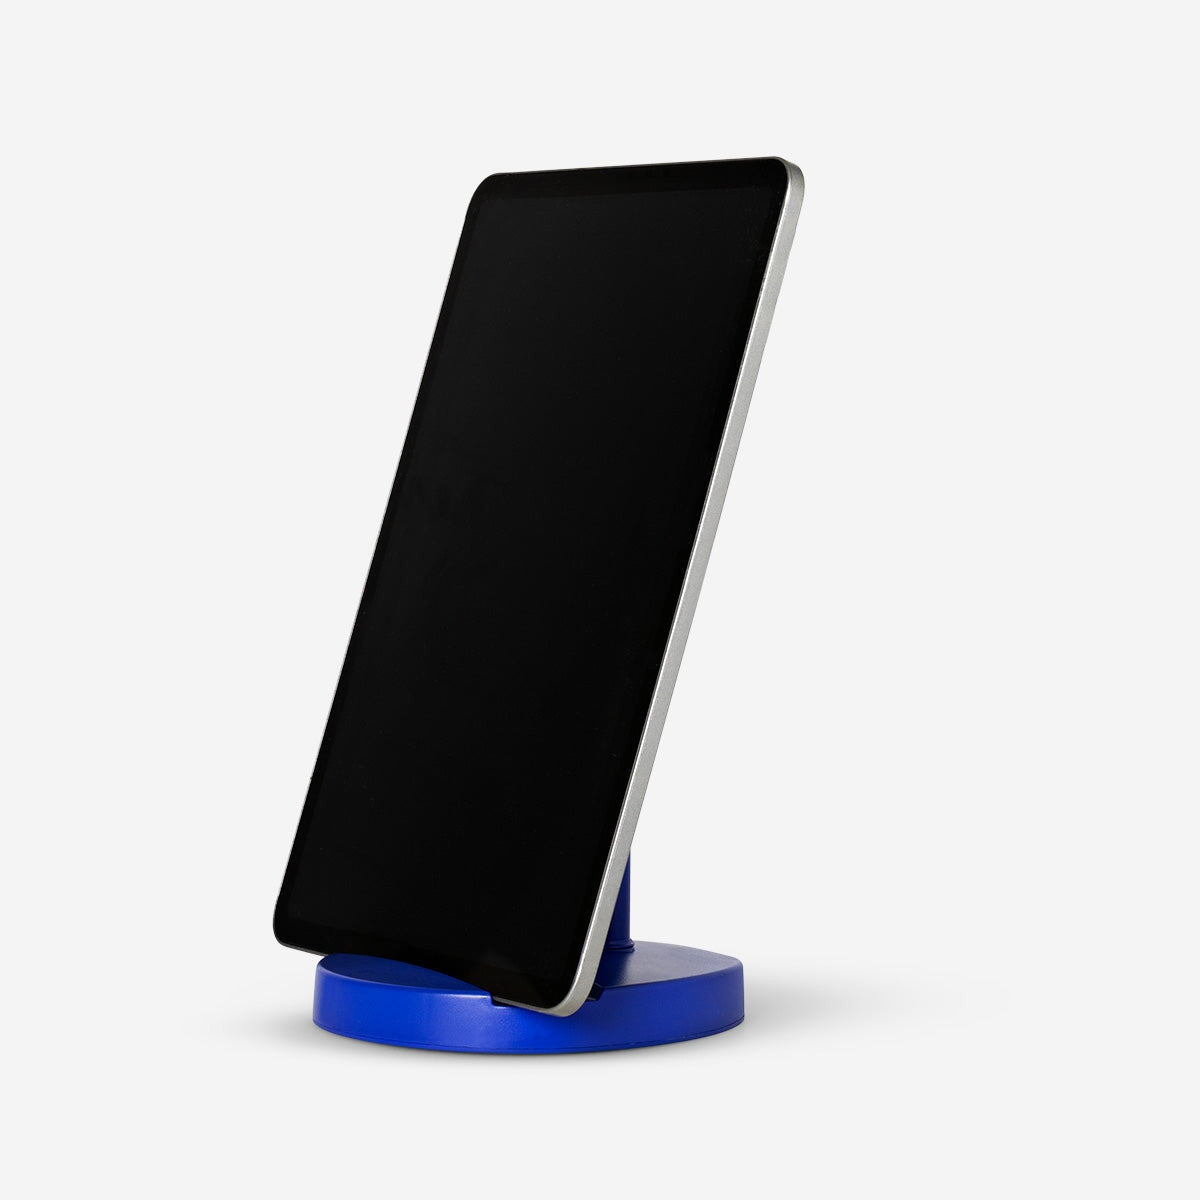 Adjustable stand. For smartphones and tablets Media Flying Tiger Copenhagen 